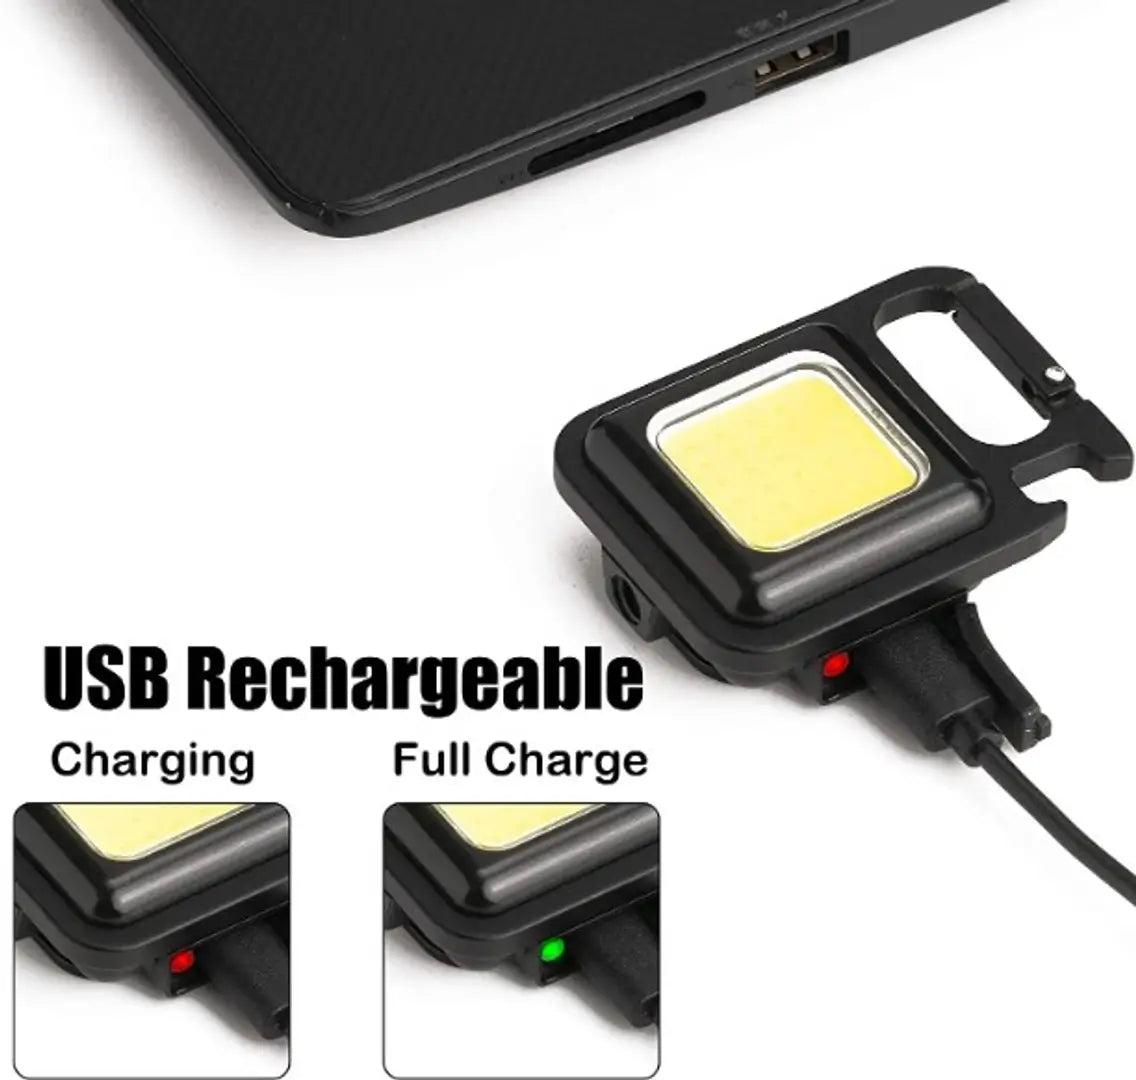 COB Small Flashlight,800 Lumens Rechargeable Keychain Mini Flashlight with 4 Light Modes,